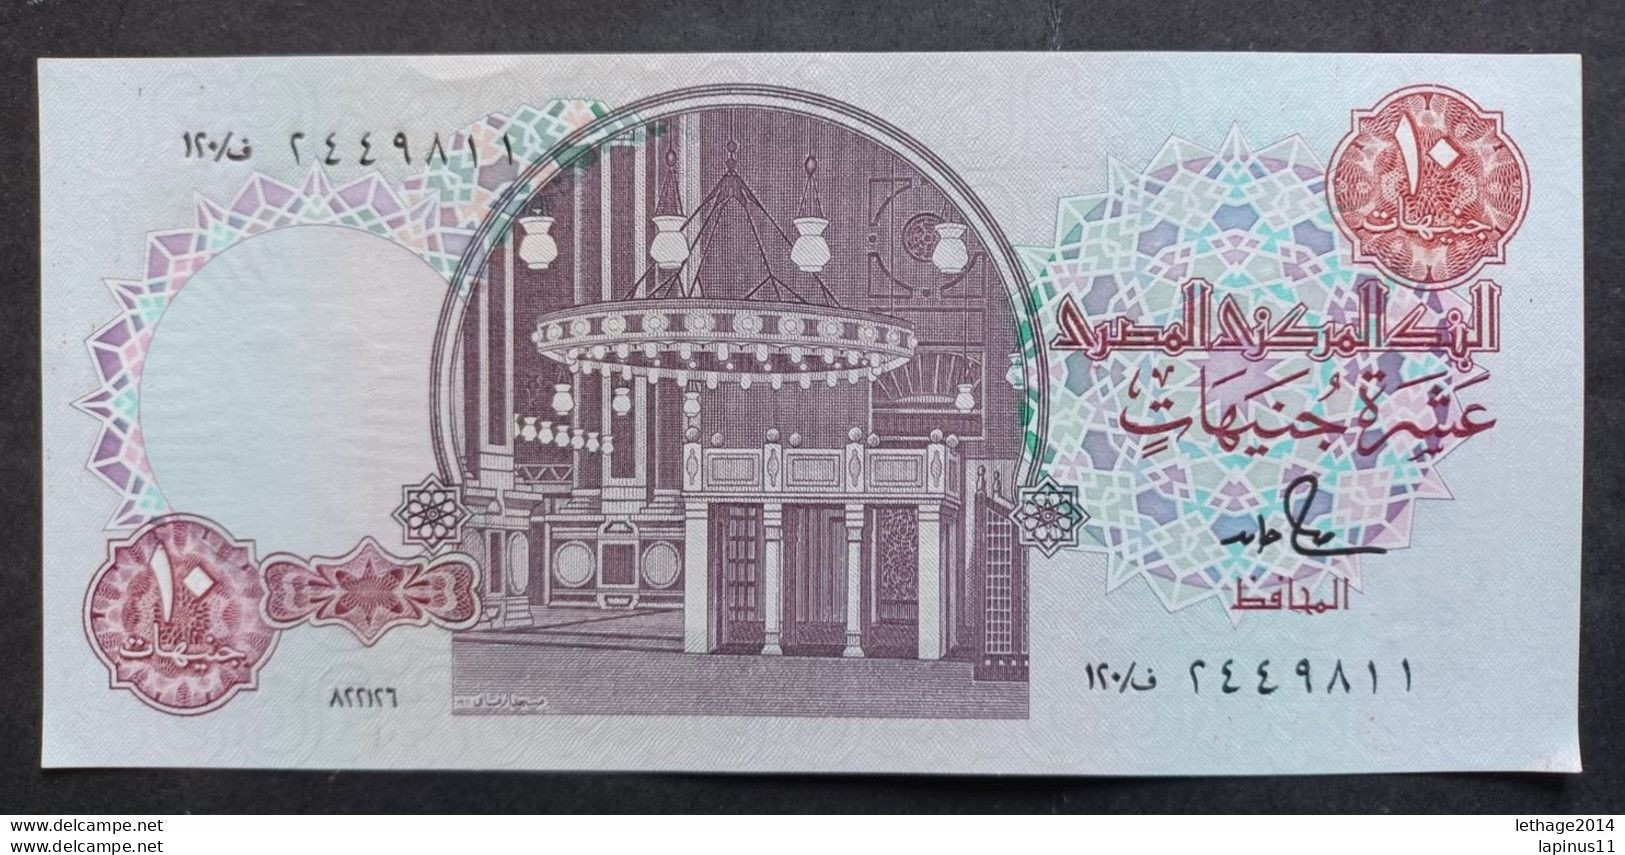 BANKNOTE SAUDI ARABIA 10 RIYAL KING FAISAL 1984 UNCIRCOLATED - Saudi Arabia